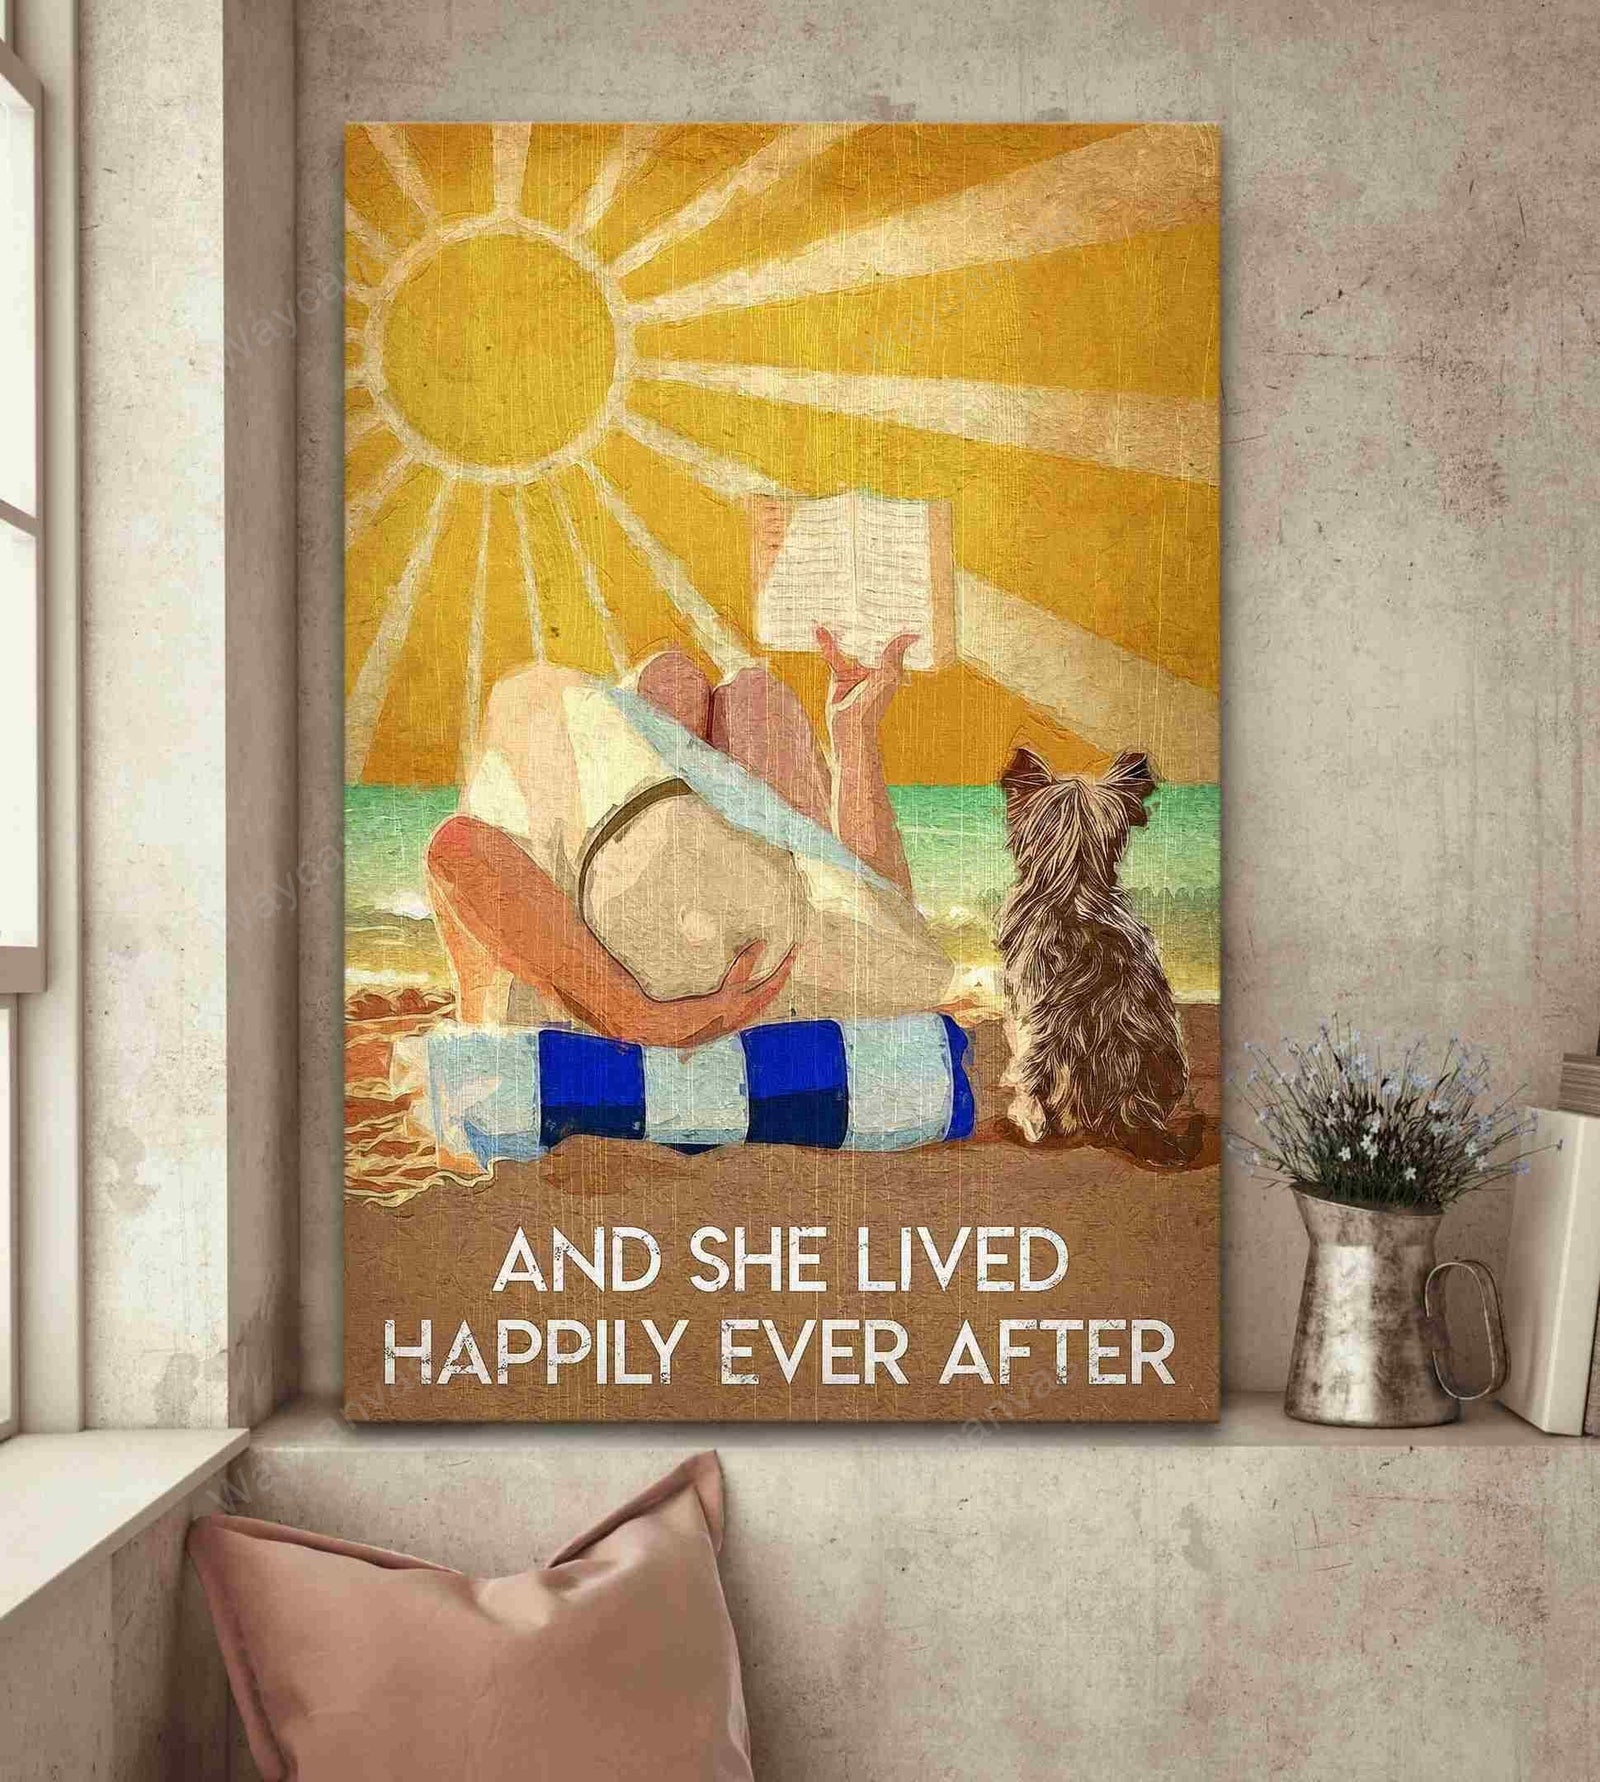  Poster of Yorkie, Yorkshire Terrier High Fashion Design Wall  Art - Glam Decor for Women, Girls Room, Teens Bedroom - Designer Luggage -  Blue Gift for Dog Lovers - Luxury Haute